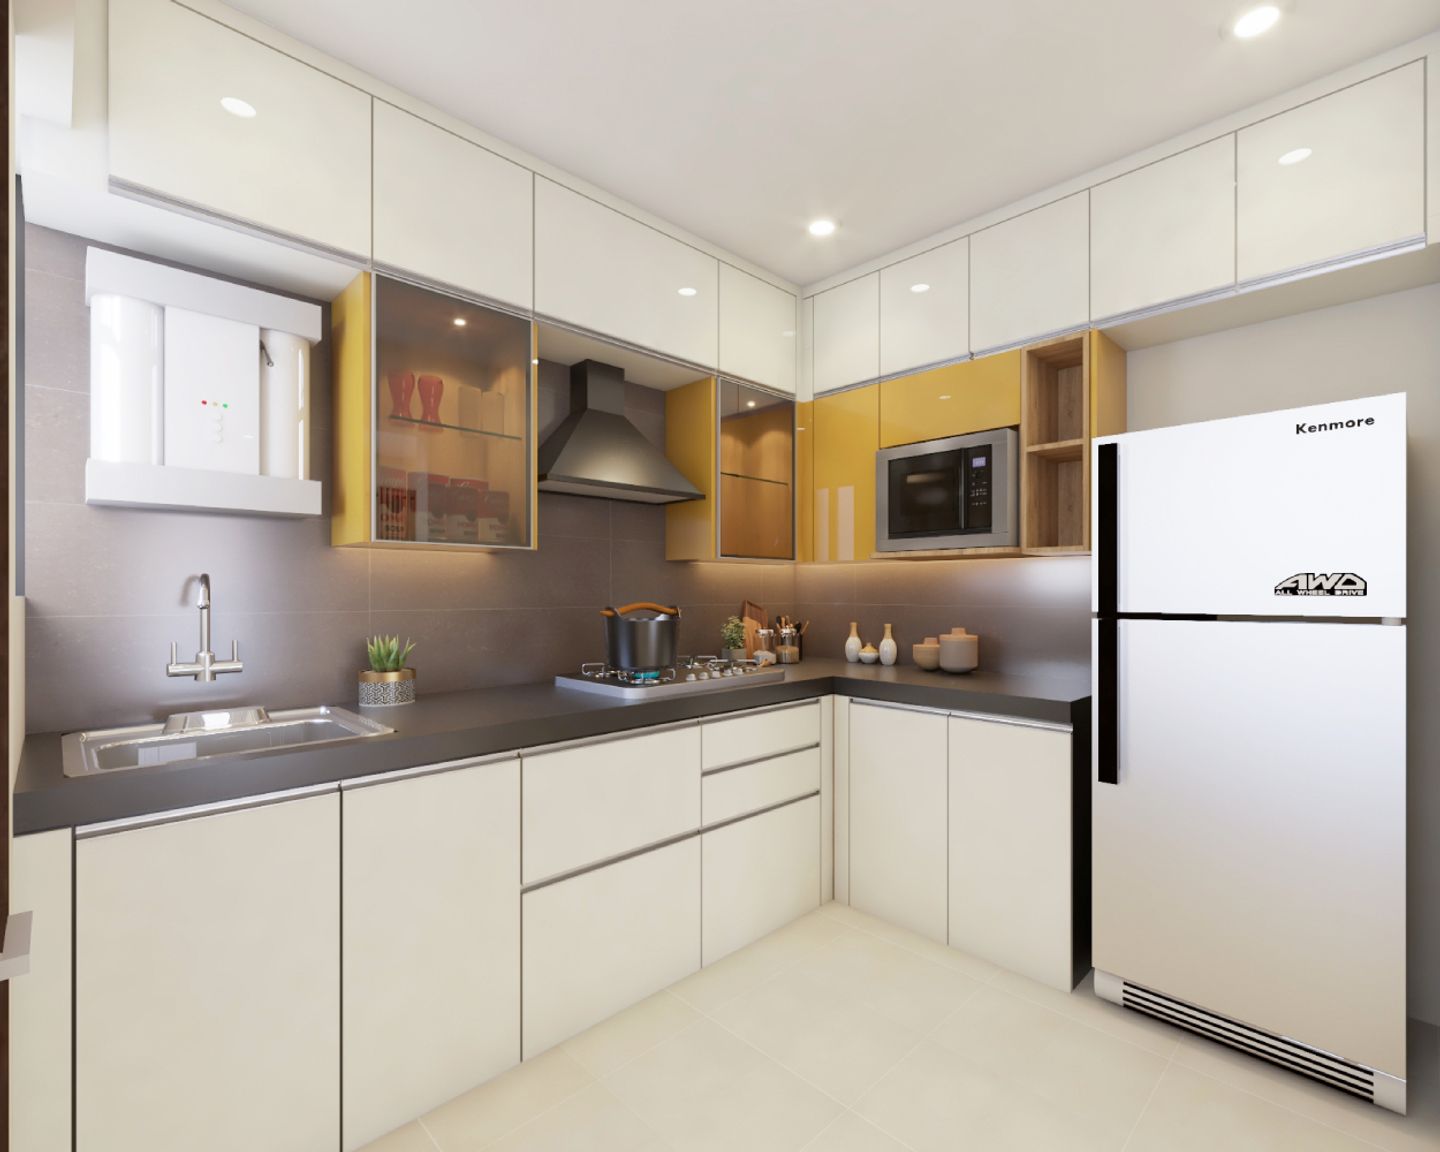 Modular L Shape Kitchen Design In Champagne And Solar Yellow Tones - Livspace